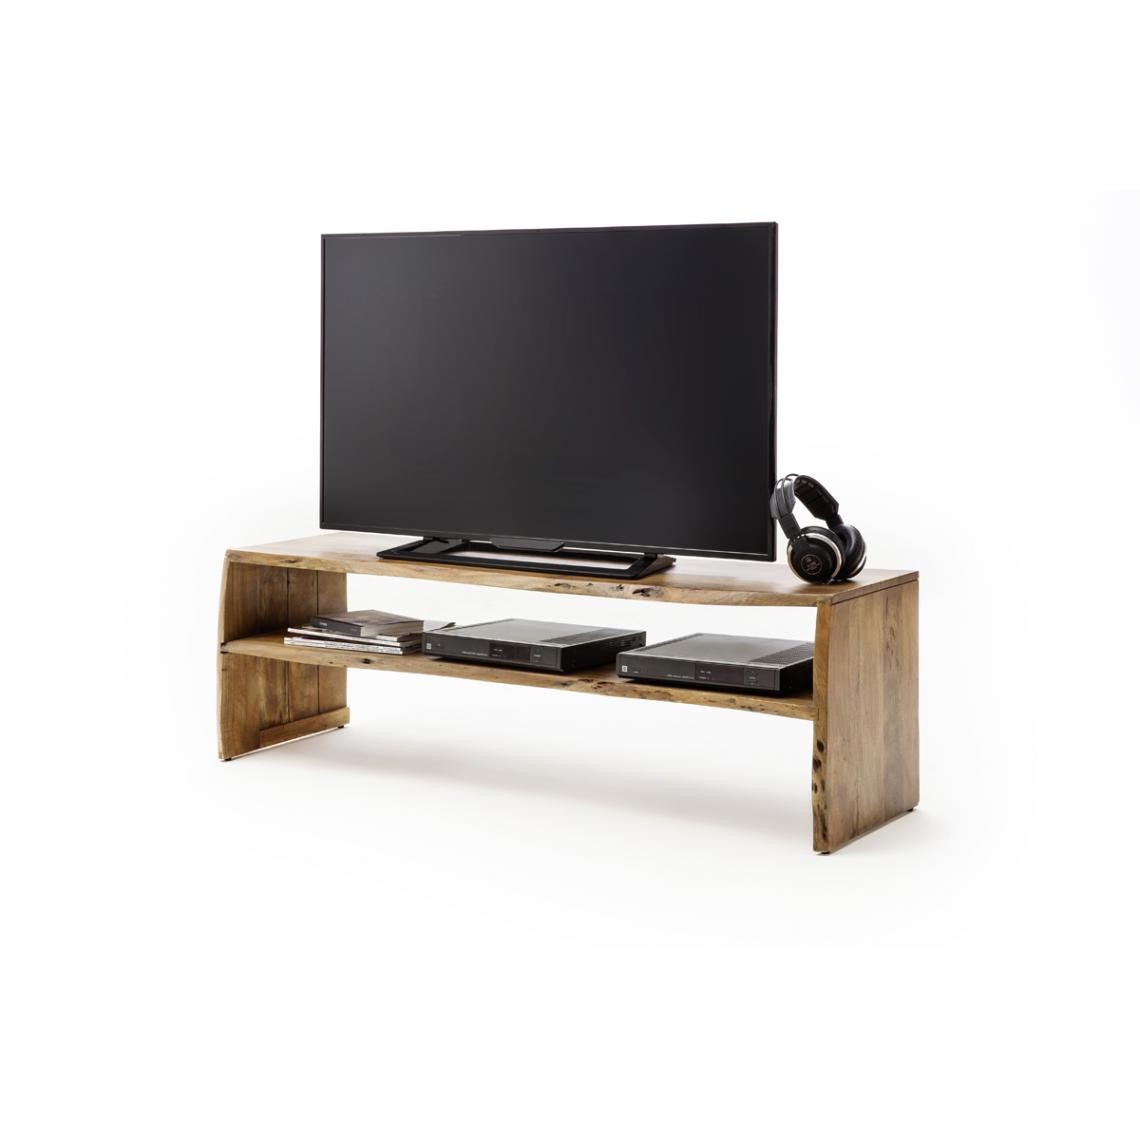 Pegane - Meuble TV en bois d'acacia massif coloris nature - L145 x H45 x P40 cm - Meubles TV, Hi-Fi